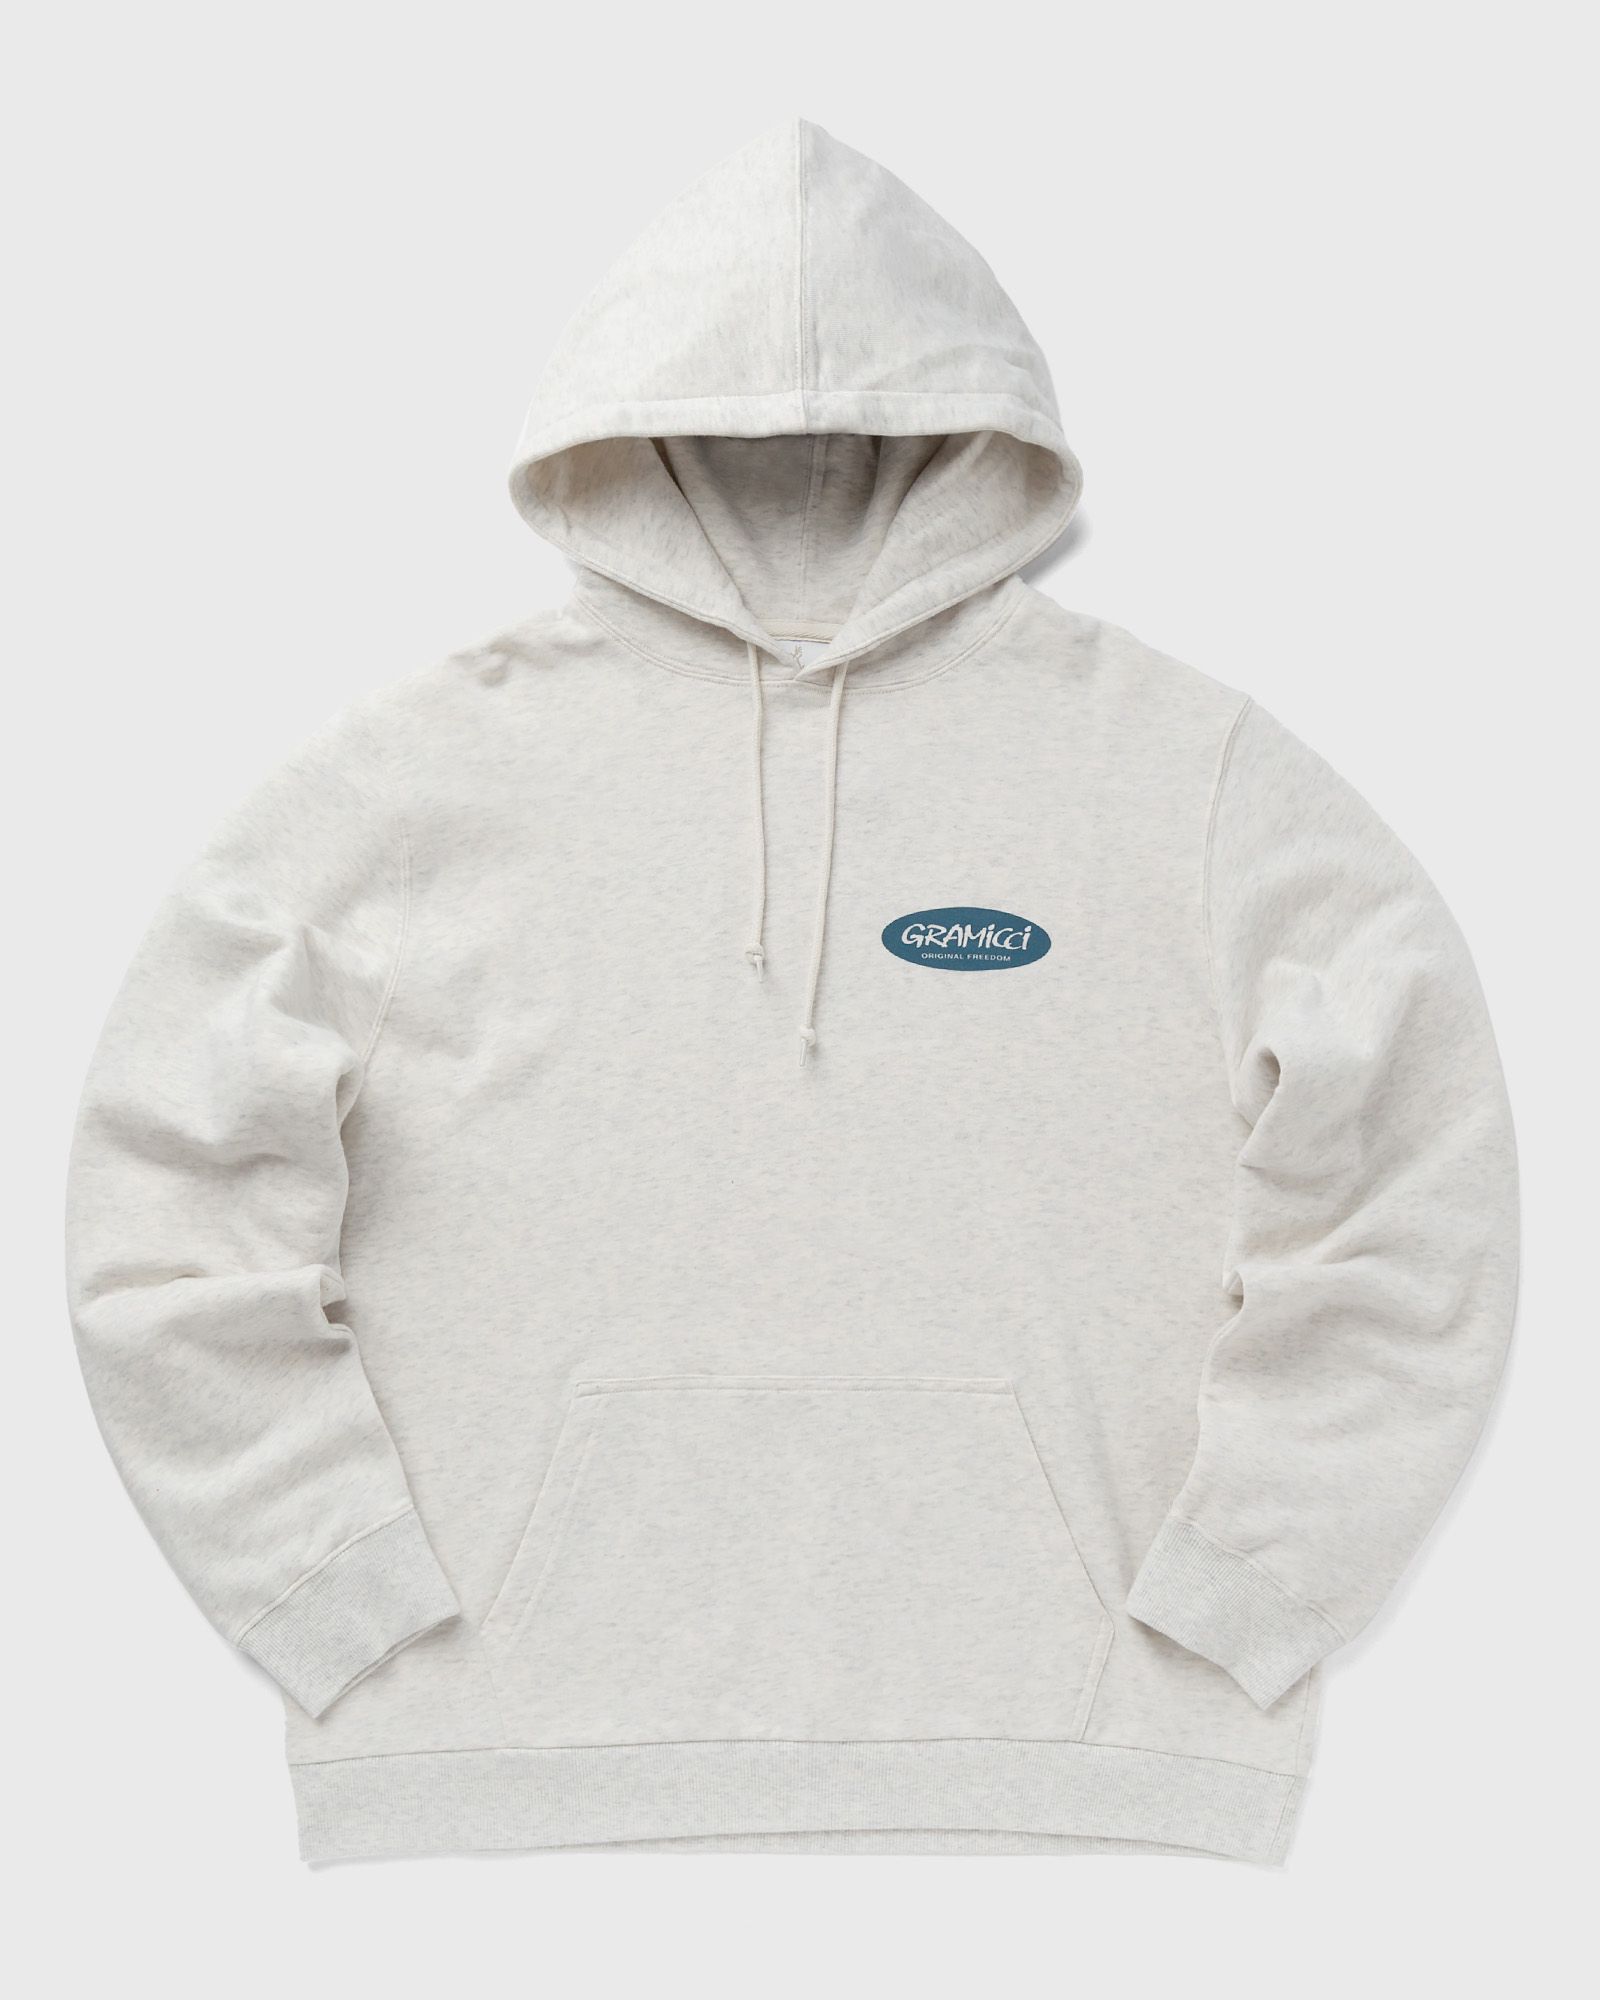 Gramicci - original freedom oval hooded sweatshirt men hoodies grey in größe:xl